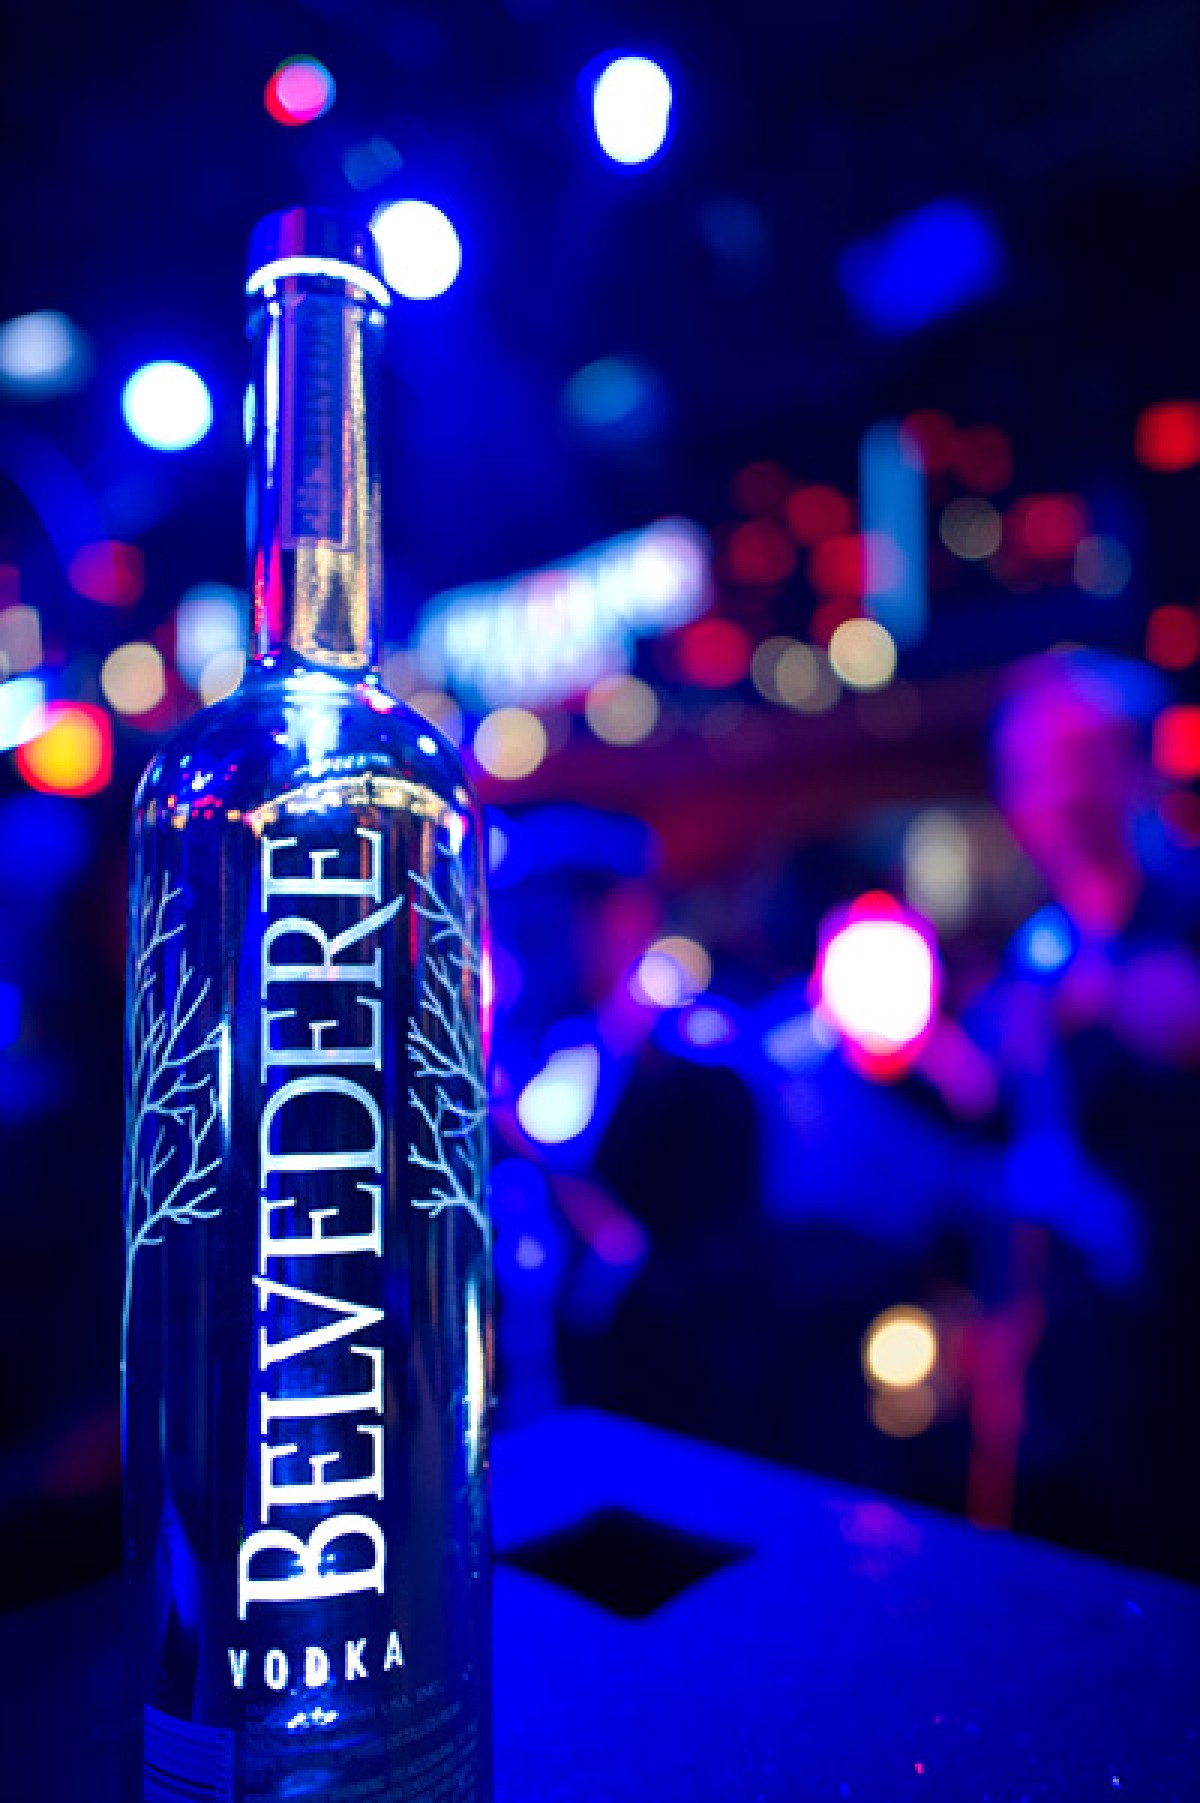 Belvedere Bloody Mary Vodka